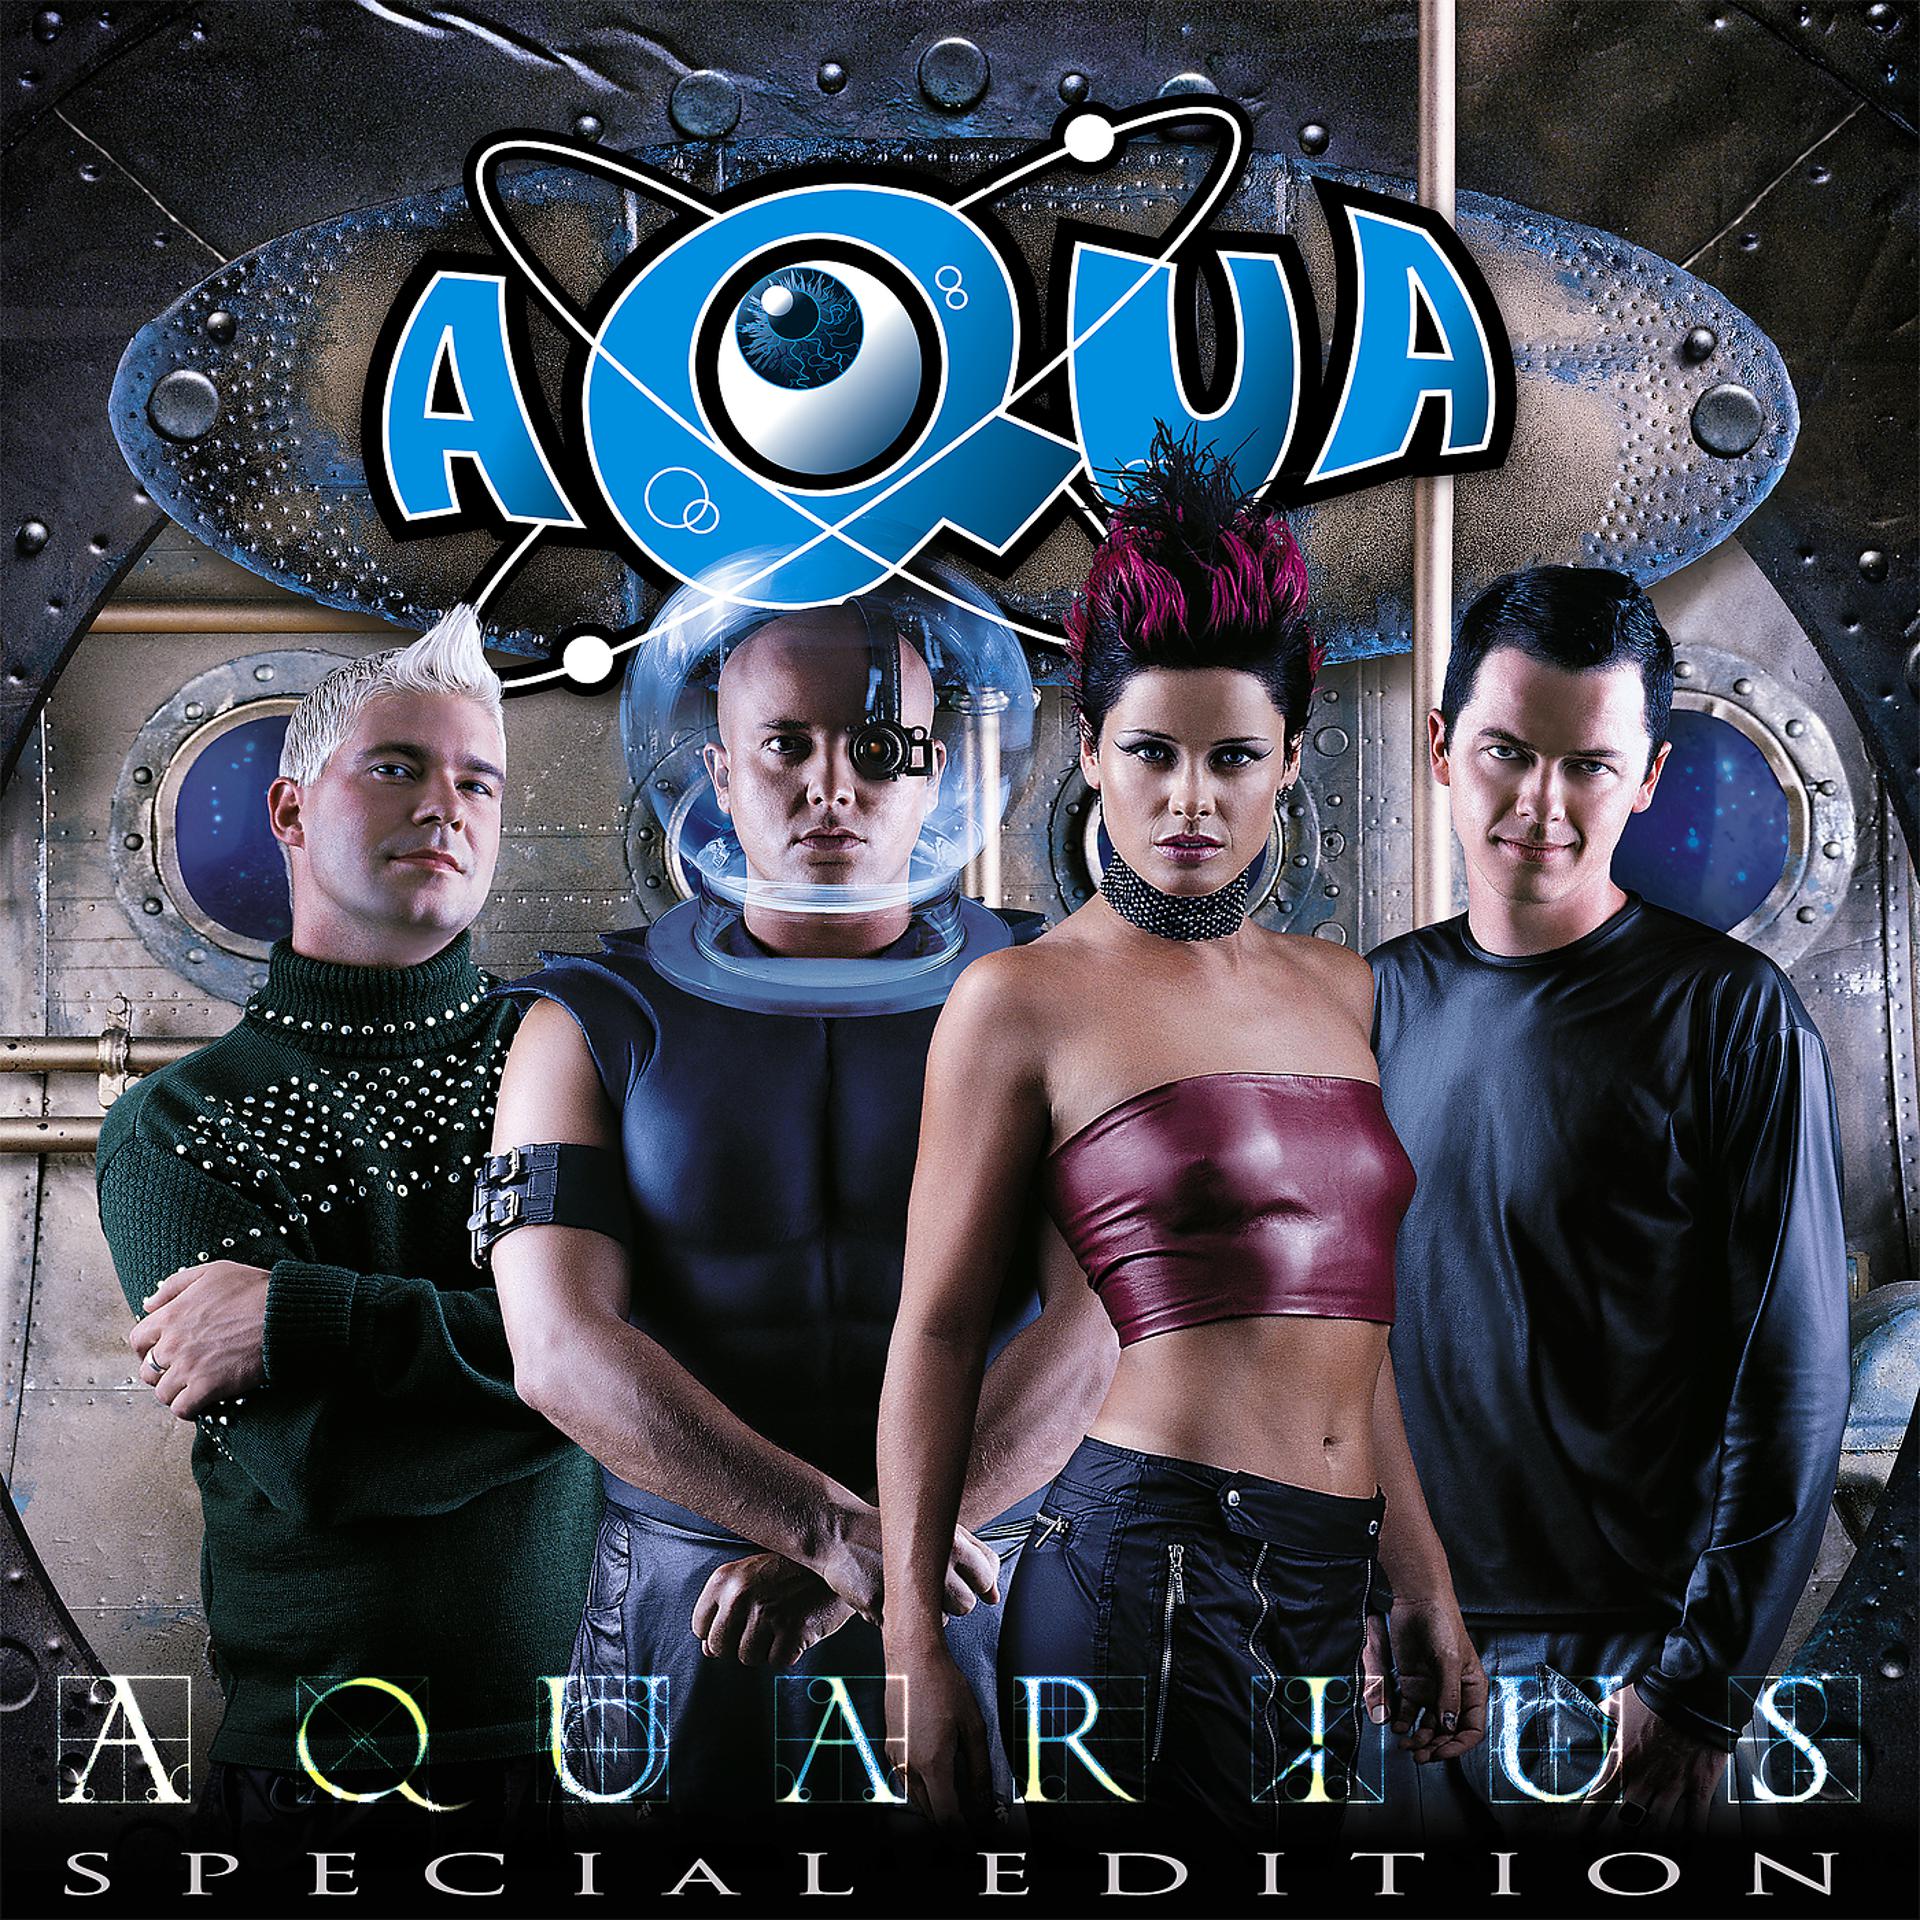 Aqua around